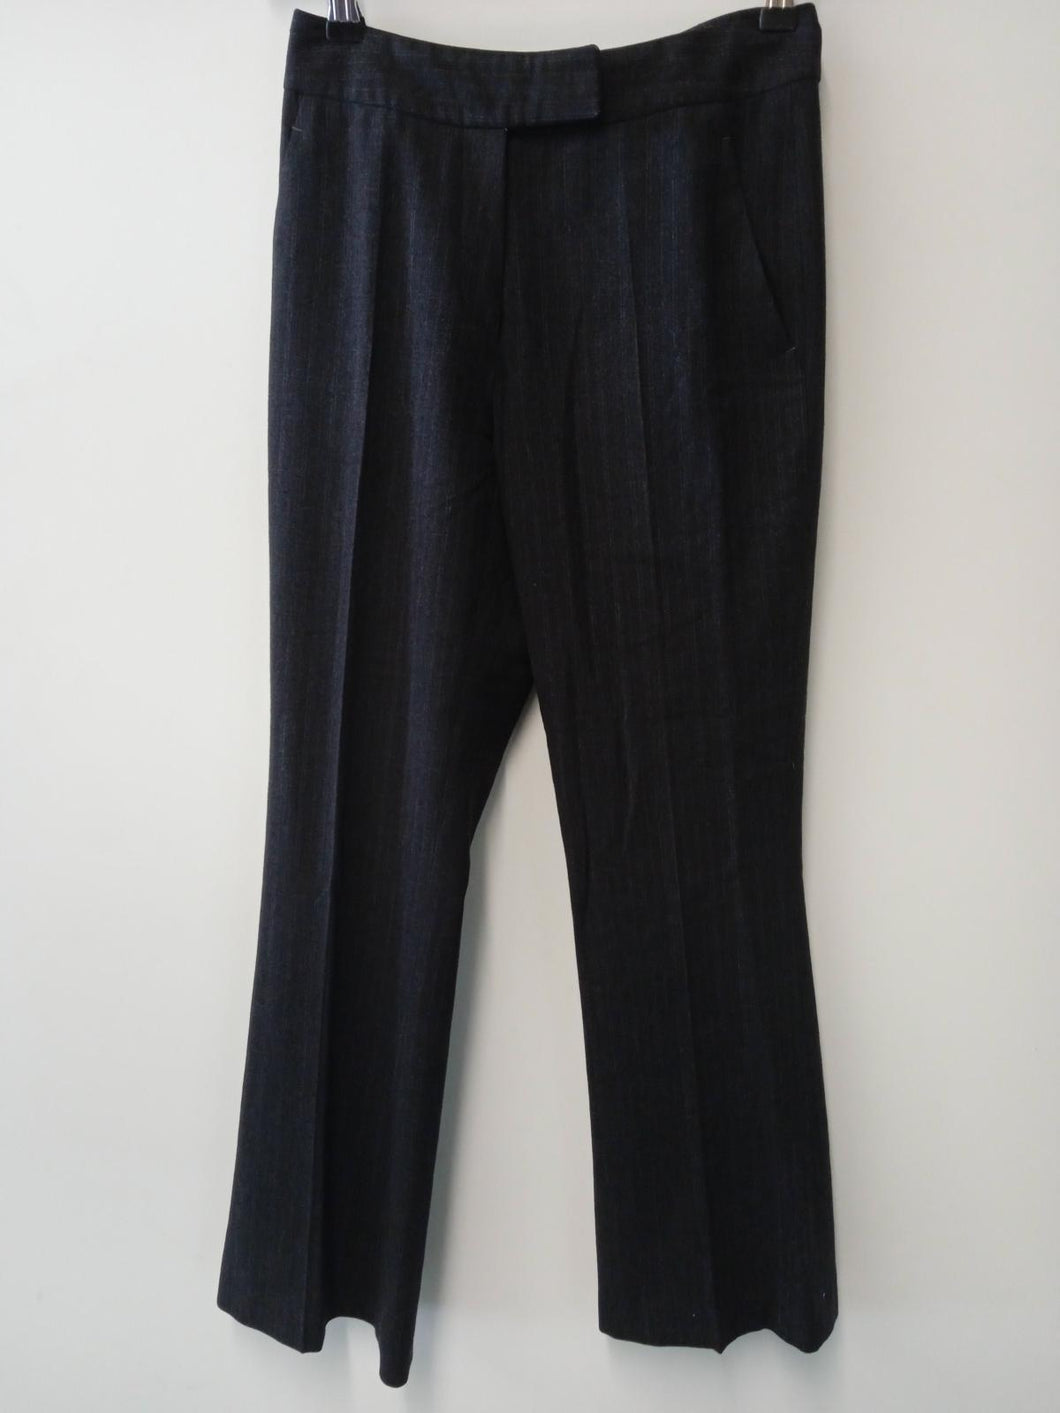 JOSEPH Ladies Dark Grey Pinstripe Dress Trousers Size UK8